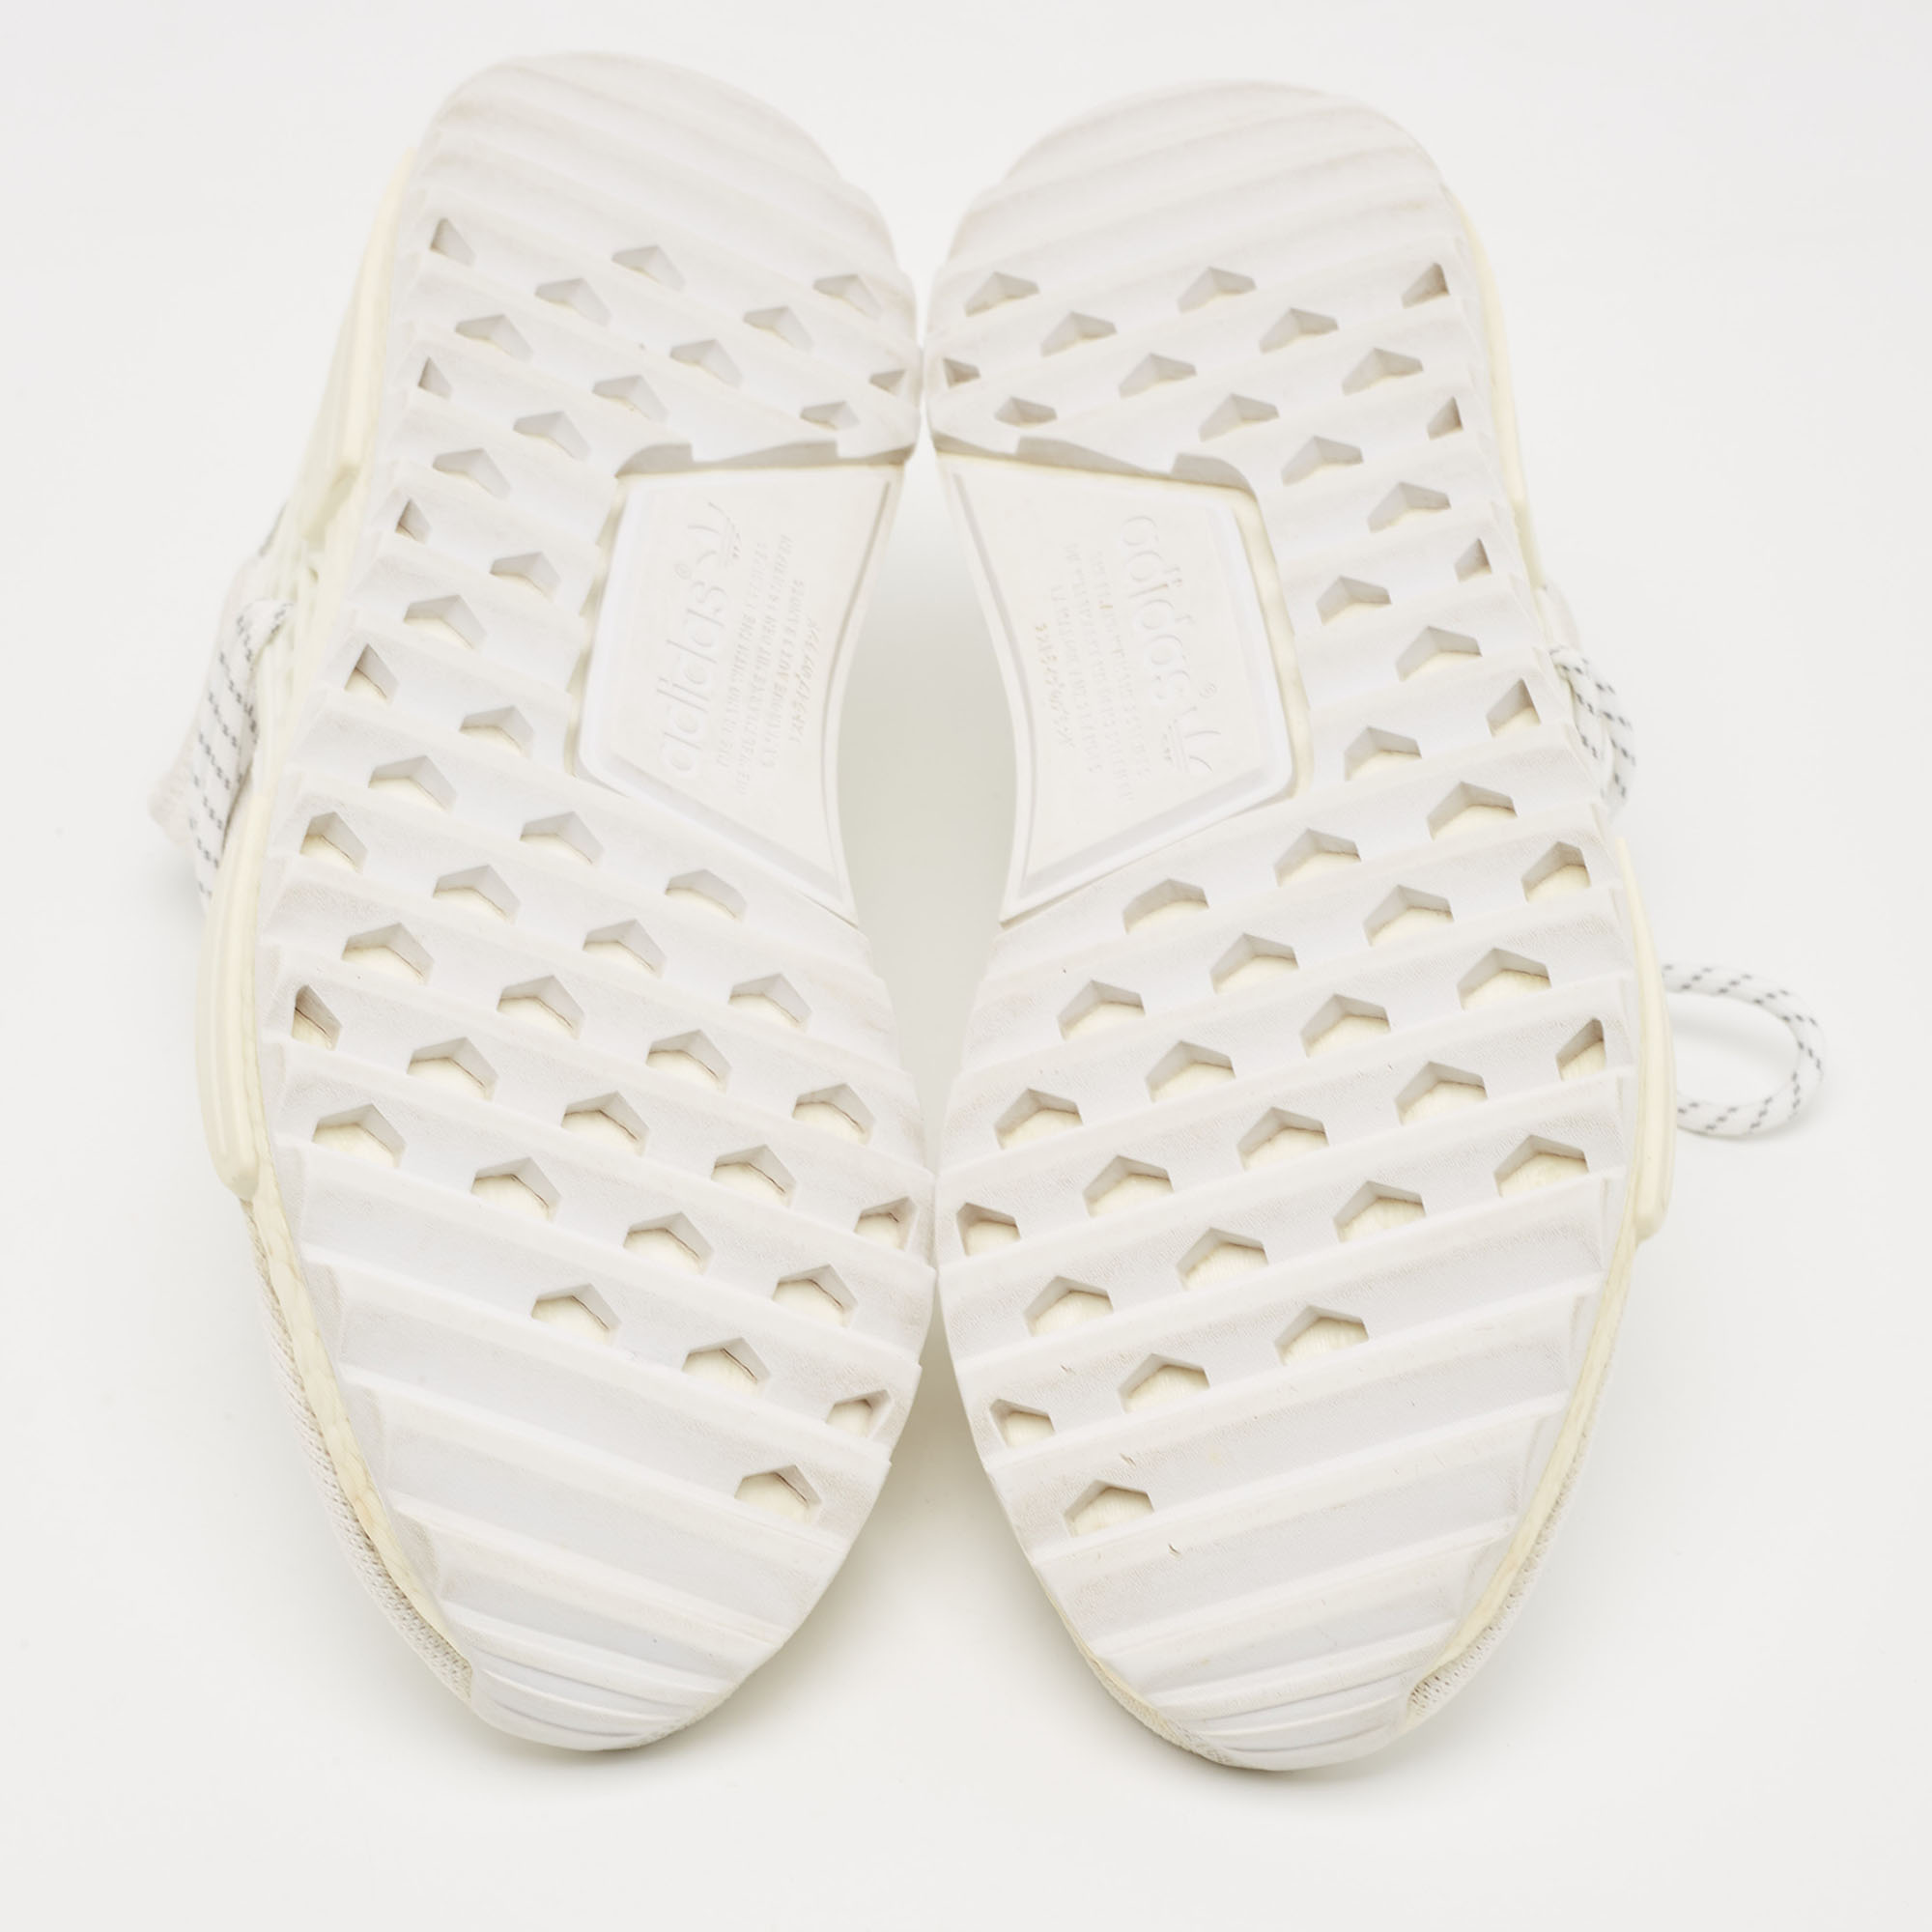 Pharrell Williams X Adidas White Knit Fabric Human Body NMD Sneakers Size 46 2/3